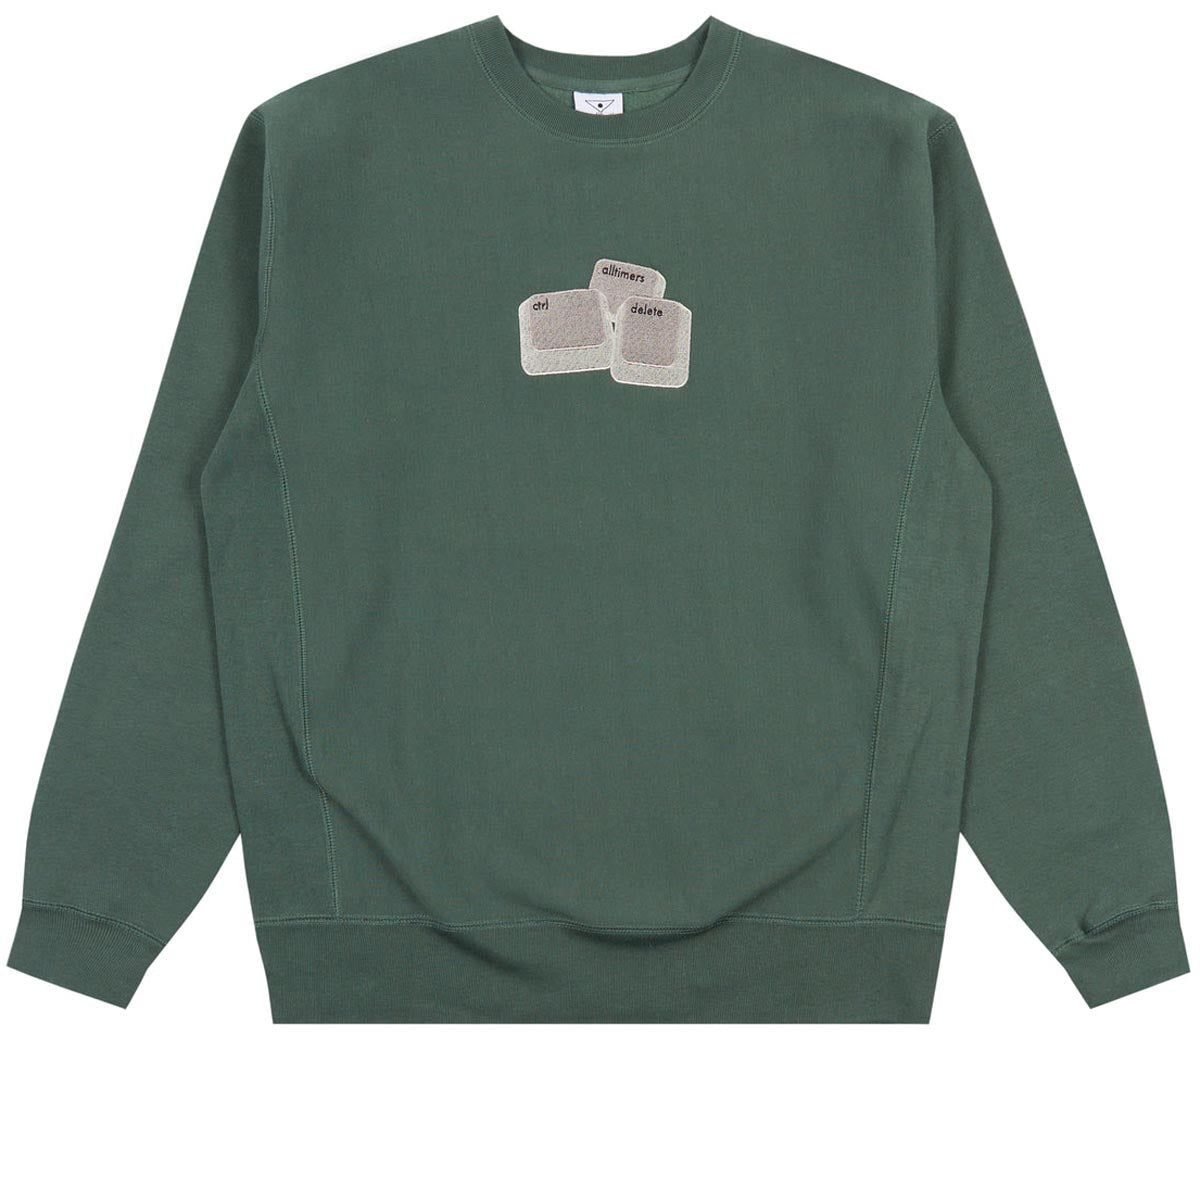 Alltimers Delete Embroidered Crewneck Sweatshirt - Alpine Green image 1